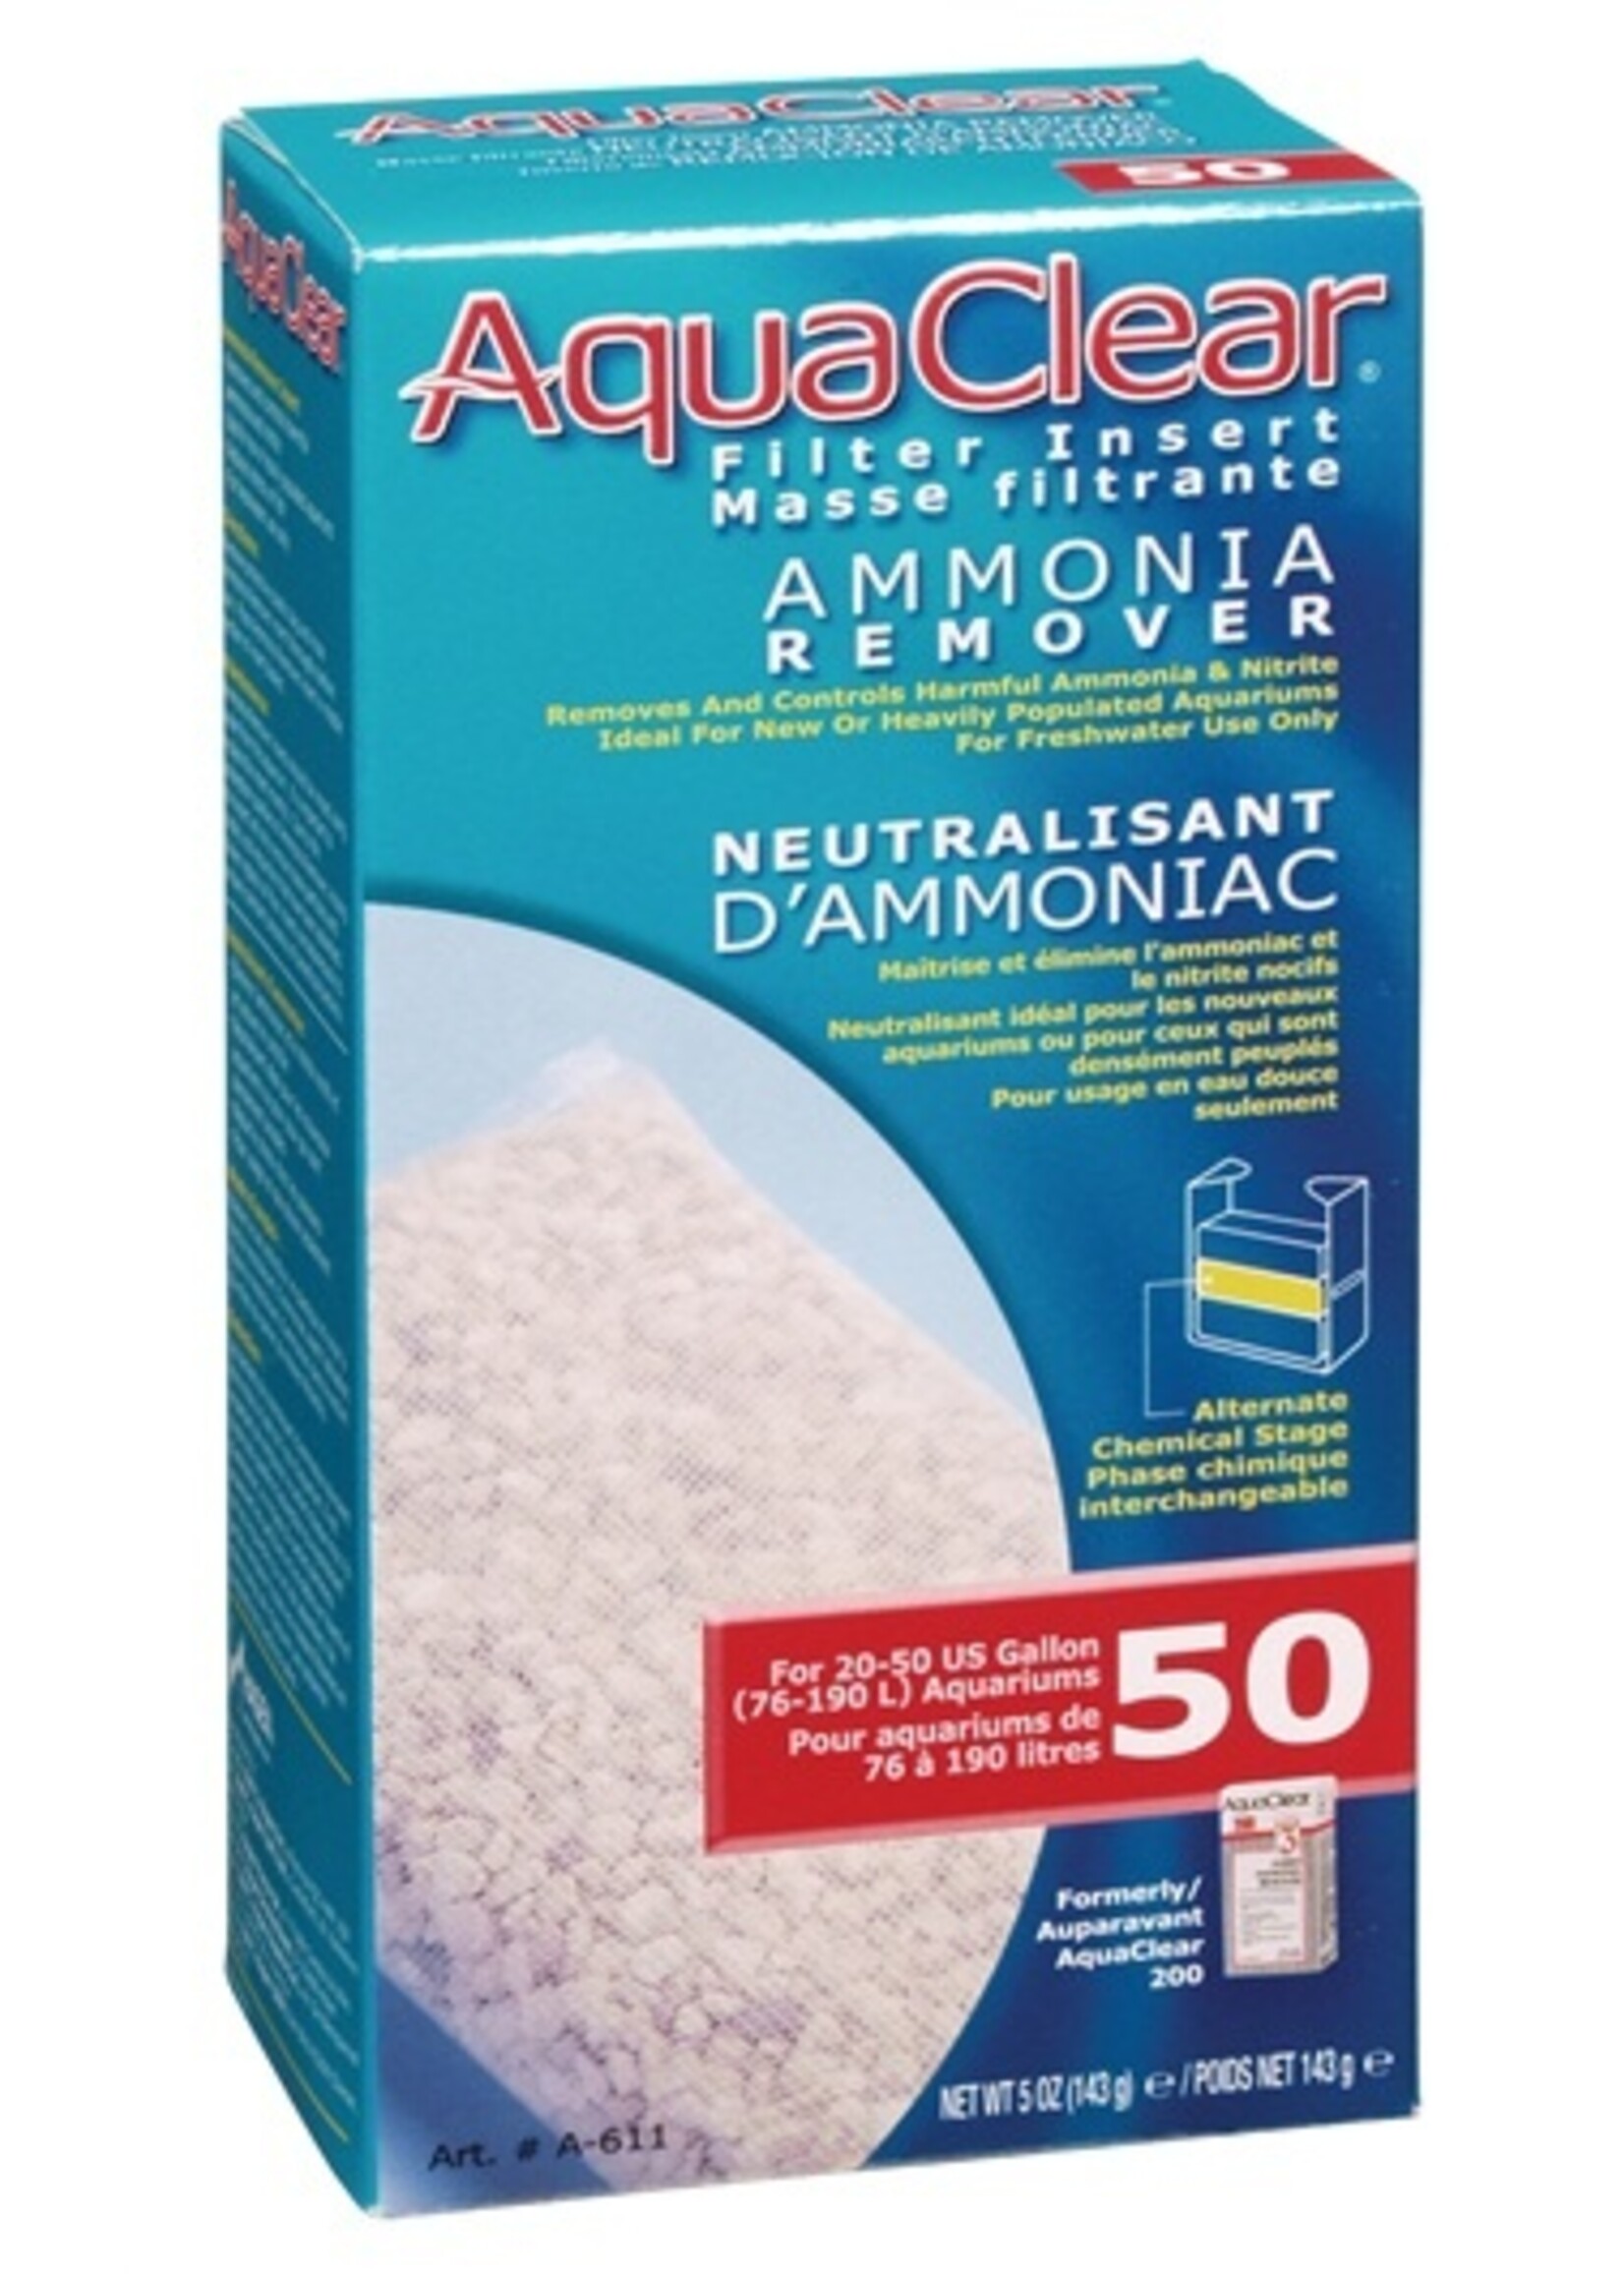 AquaClear AquaClear Ammonia Remover Filter Insert